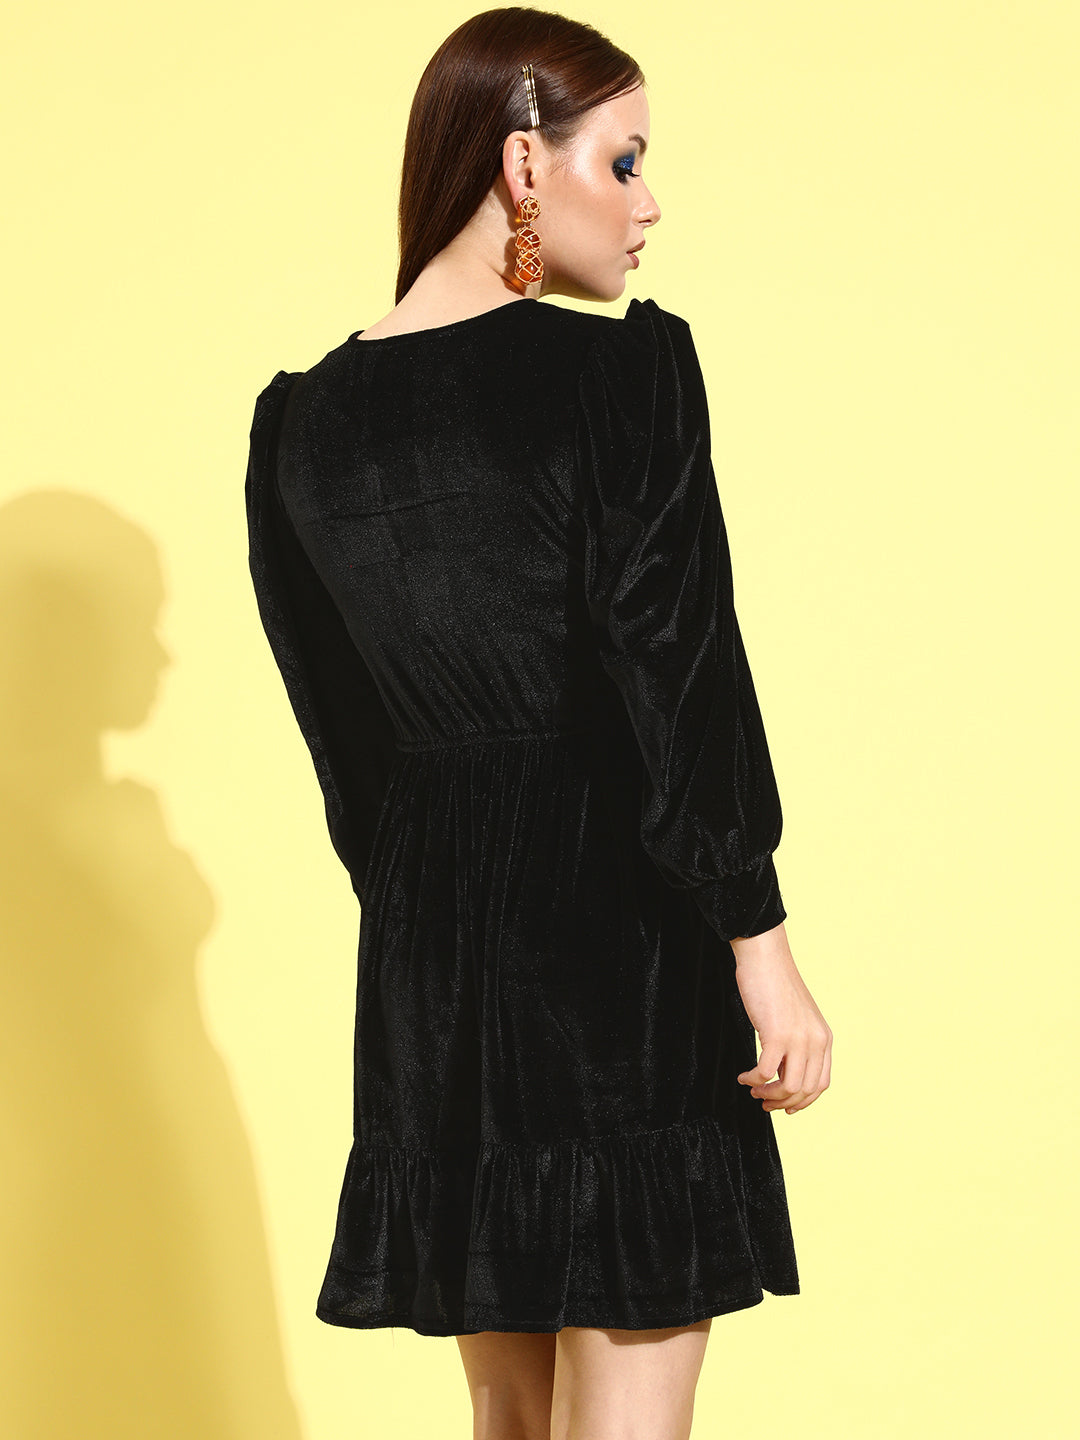 Athena Black Velvet Empire Style Fit & Flare Dress - Athena Lifestyle